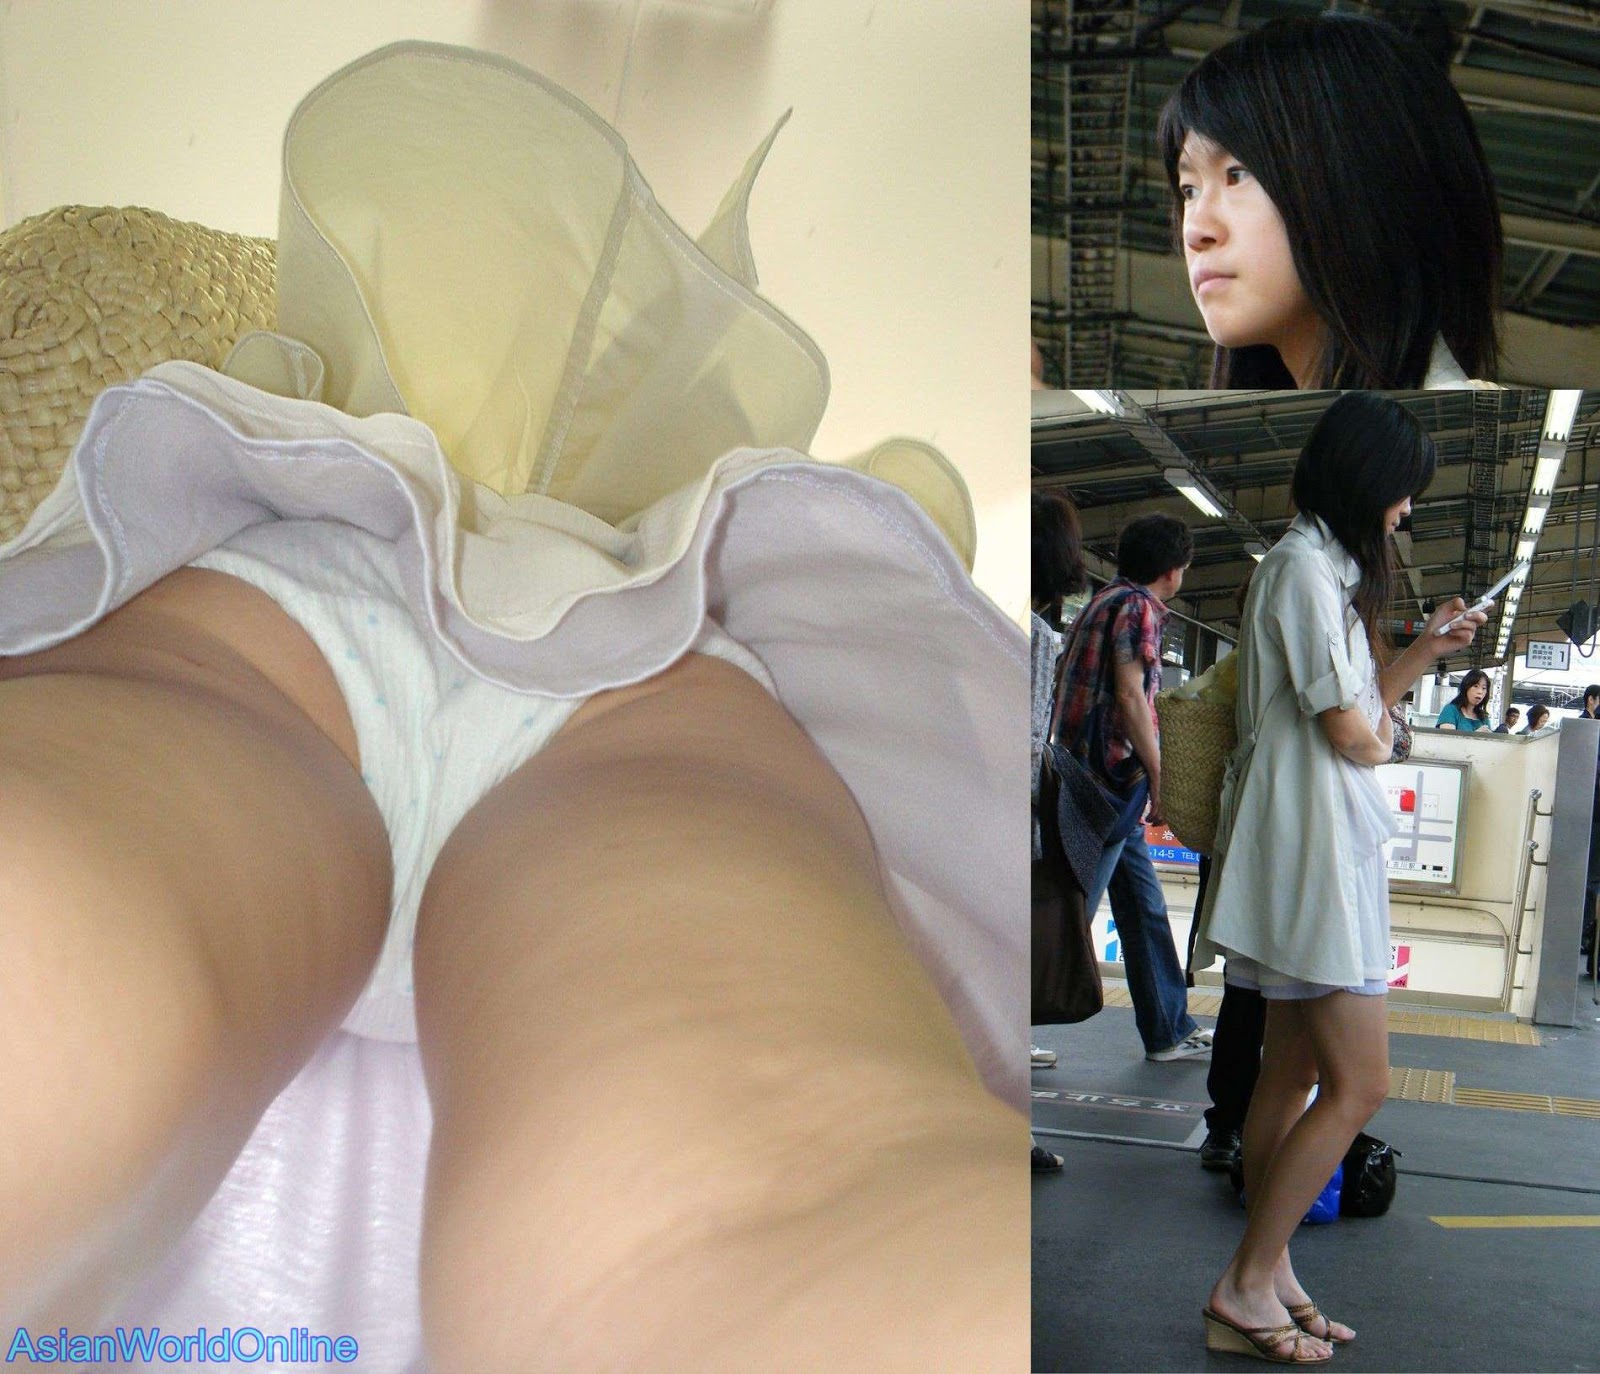 asianworldonline.blogspot.com+-+Japanese+Upskirt+part+1+002+.jpg